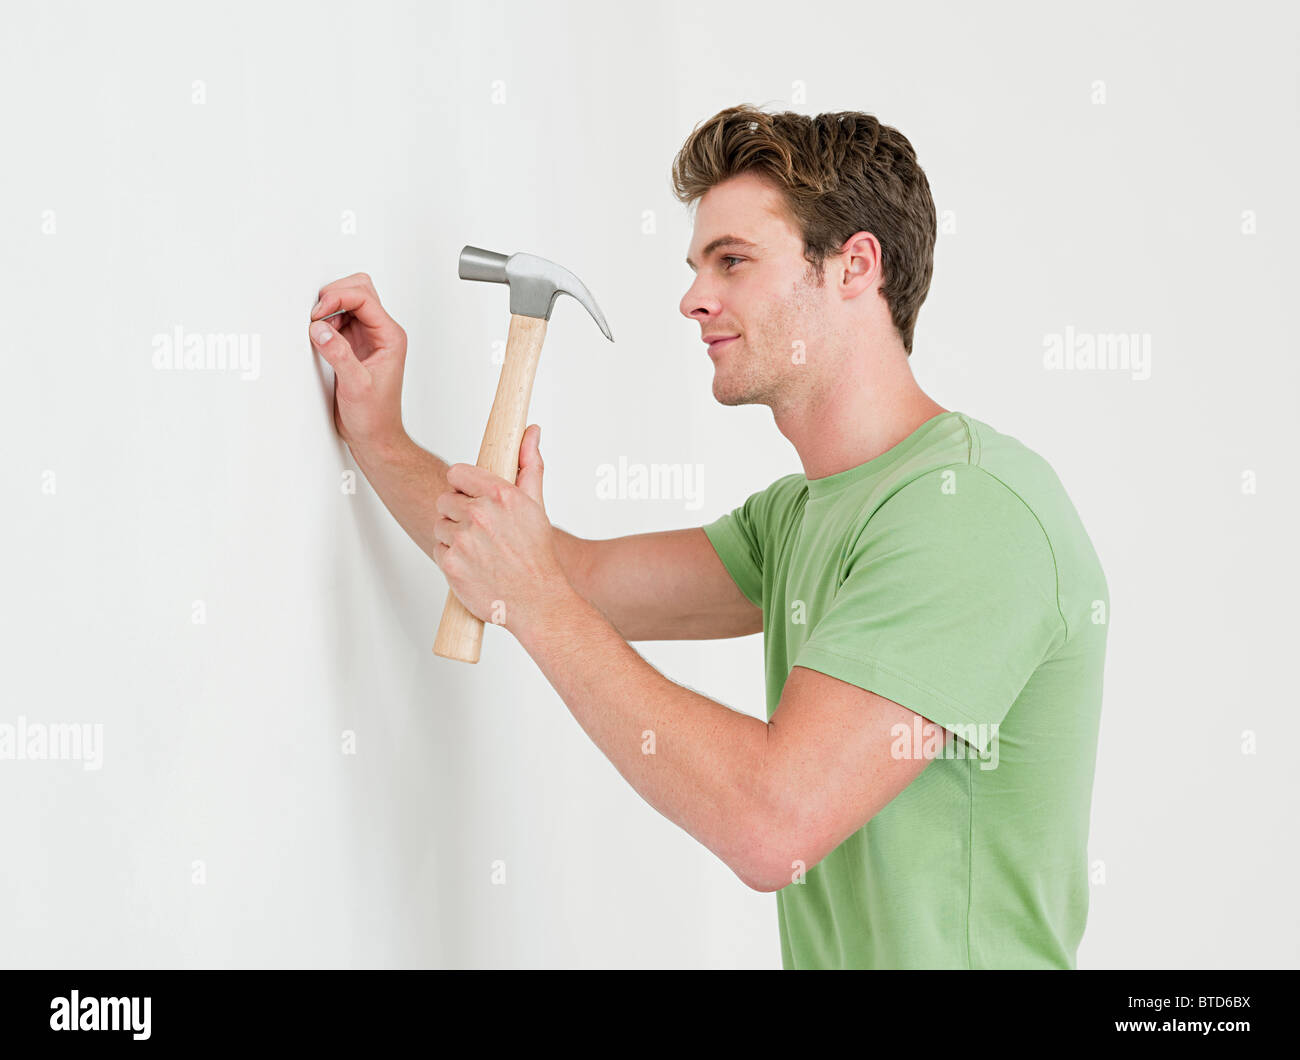 Young man hammering nail into wall Stock Photo - Alamy